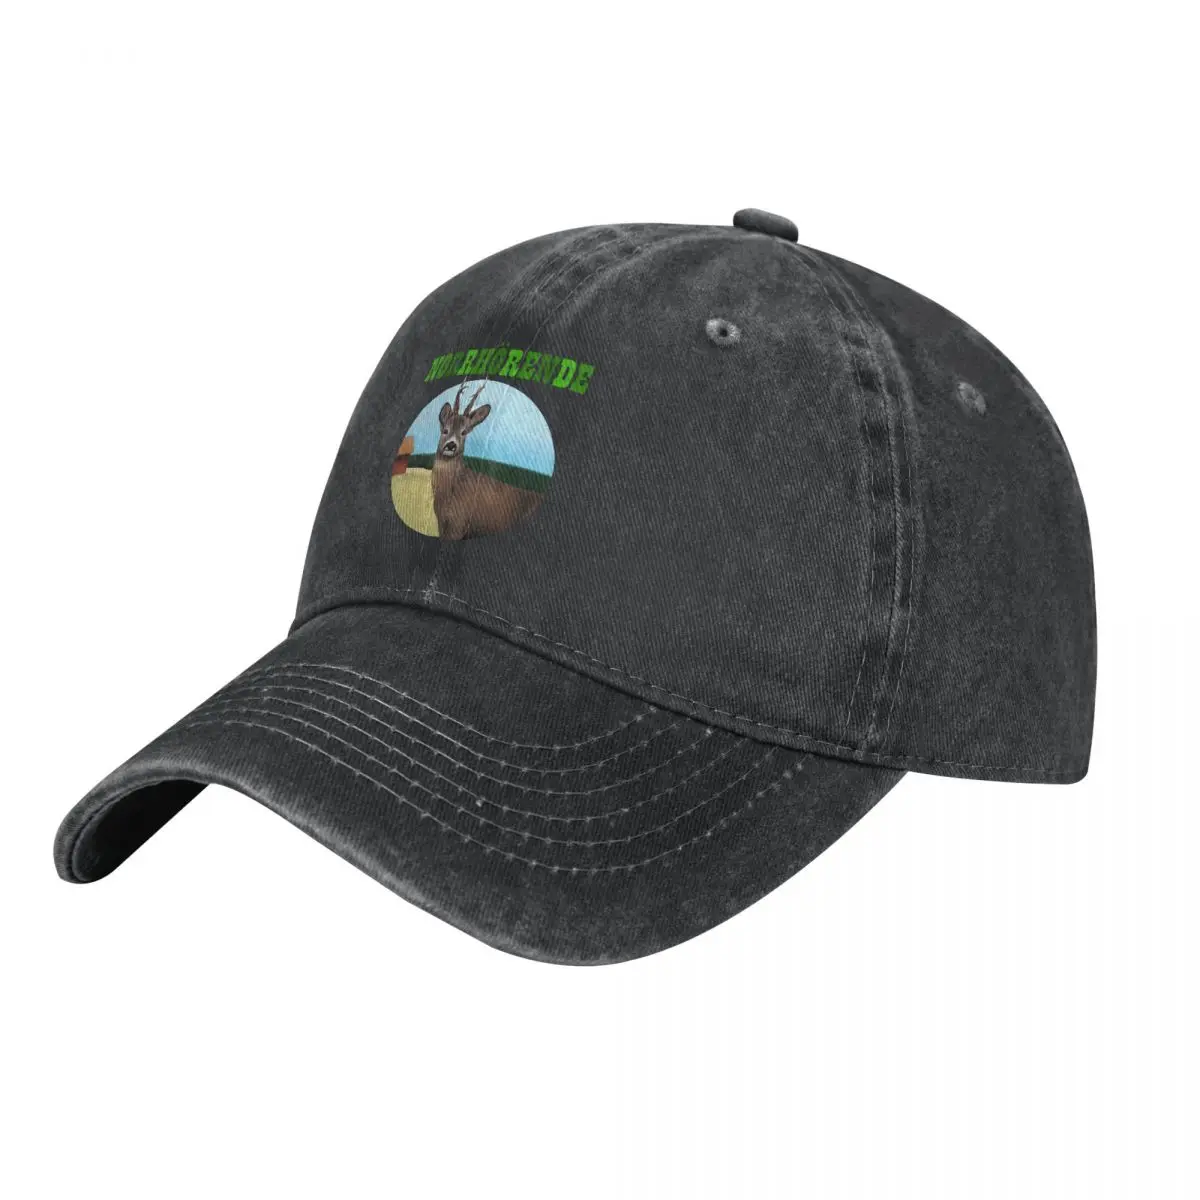 

Norrhorende Roebuck Baseball Caps Game Cowboy Hat Hats Peaked Cap For Women Shade The Sun Snapback Caps Friends